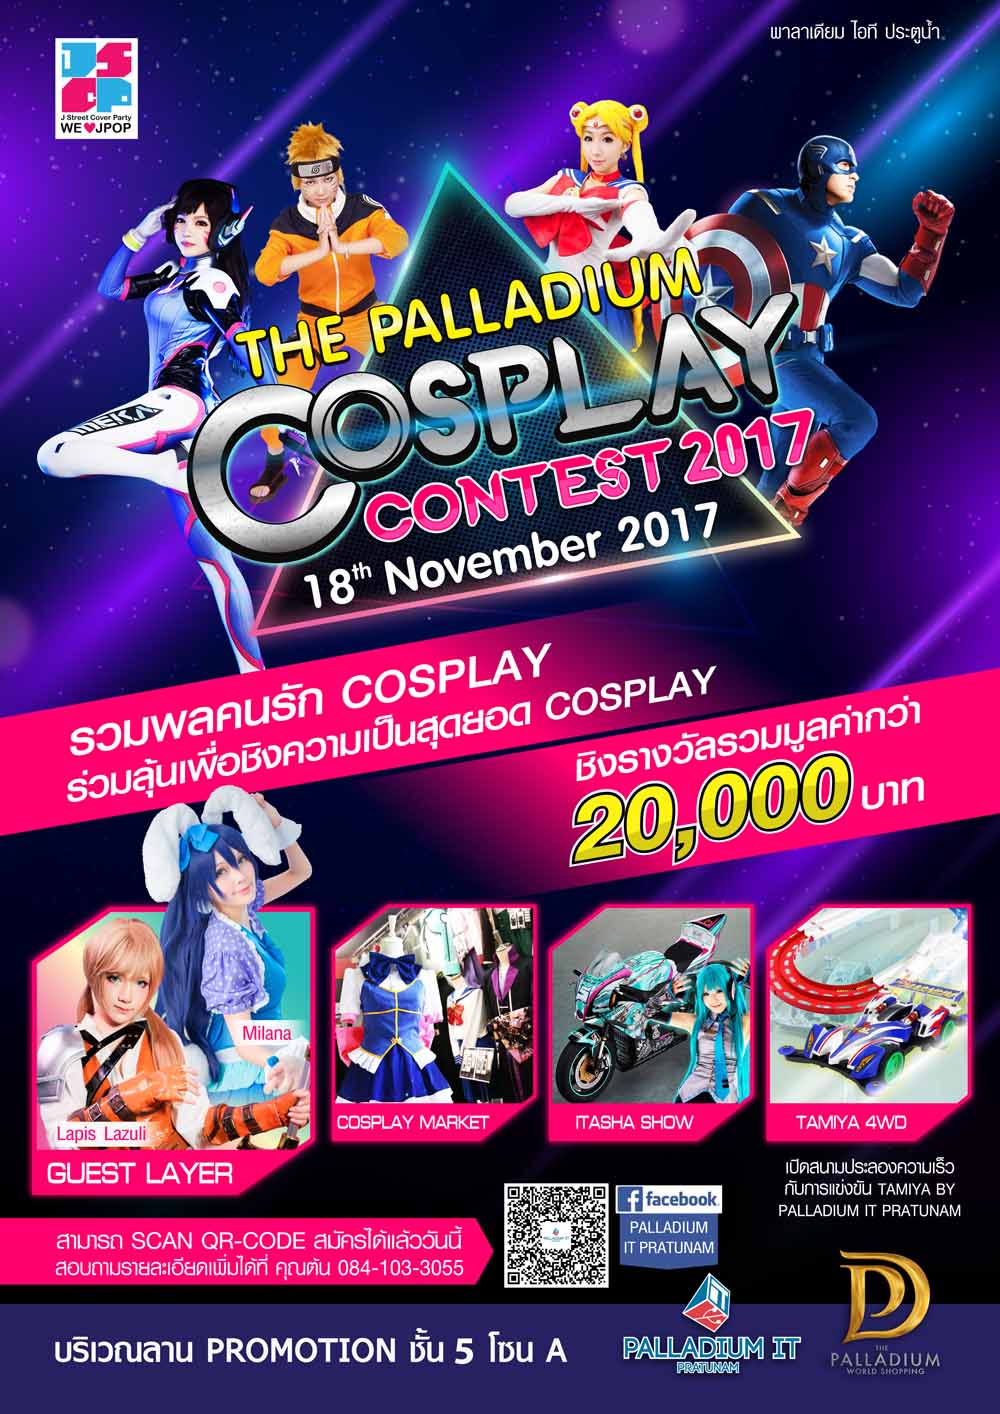 cosplay poster 2017 resize เตรียมพบกับการประกวดครั้งยิ่งใหญ่แห่งปี ในงาน The Palladium Cosplay Contest 2017 